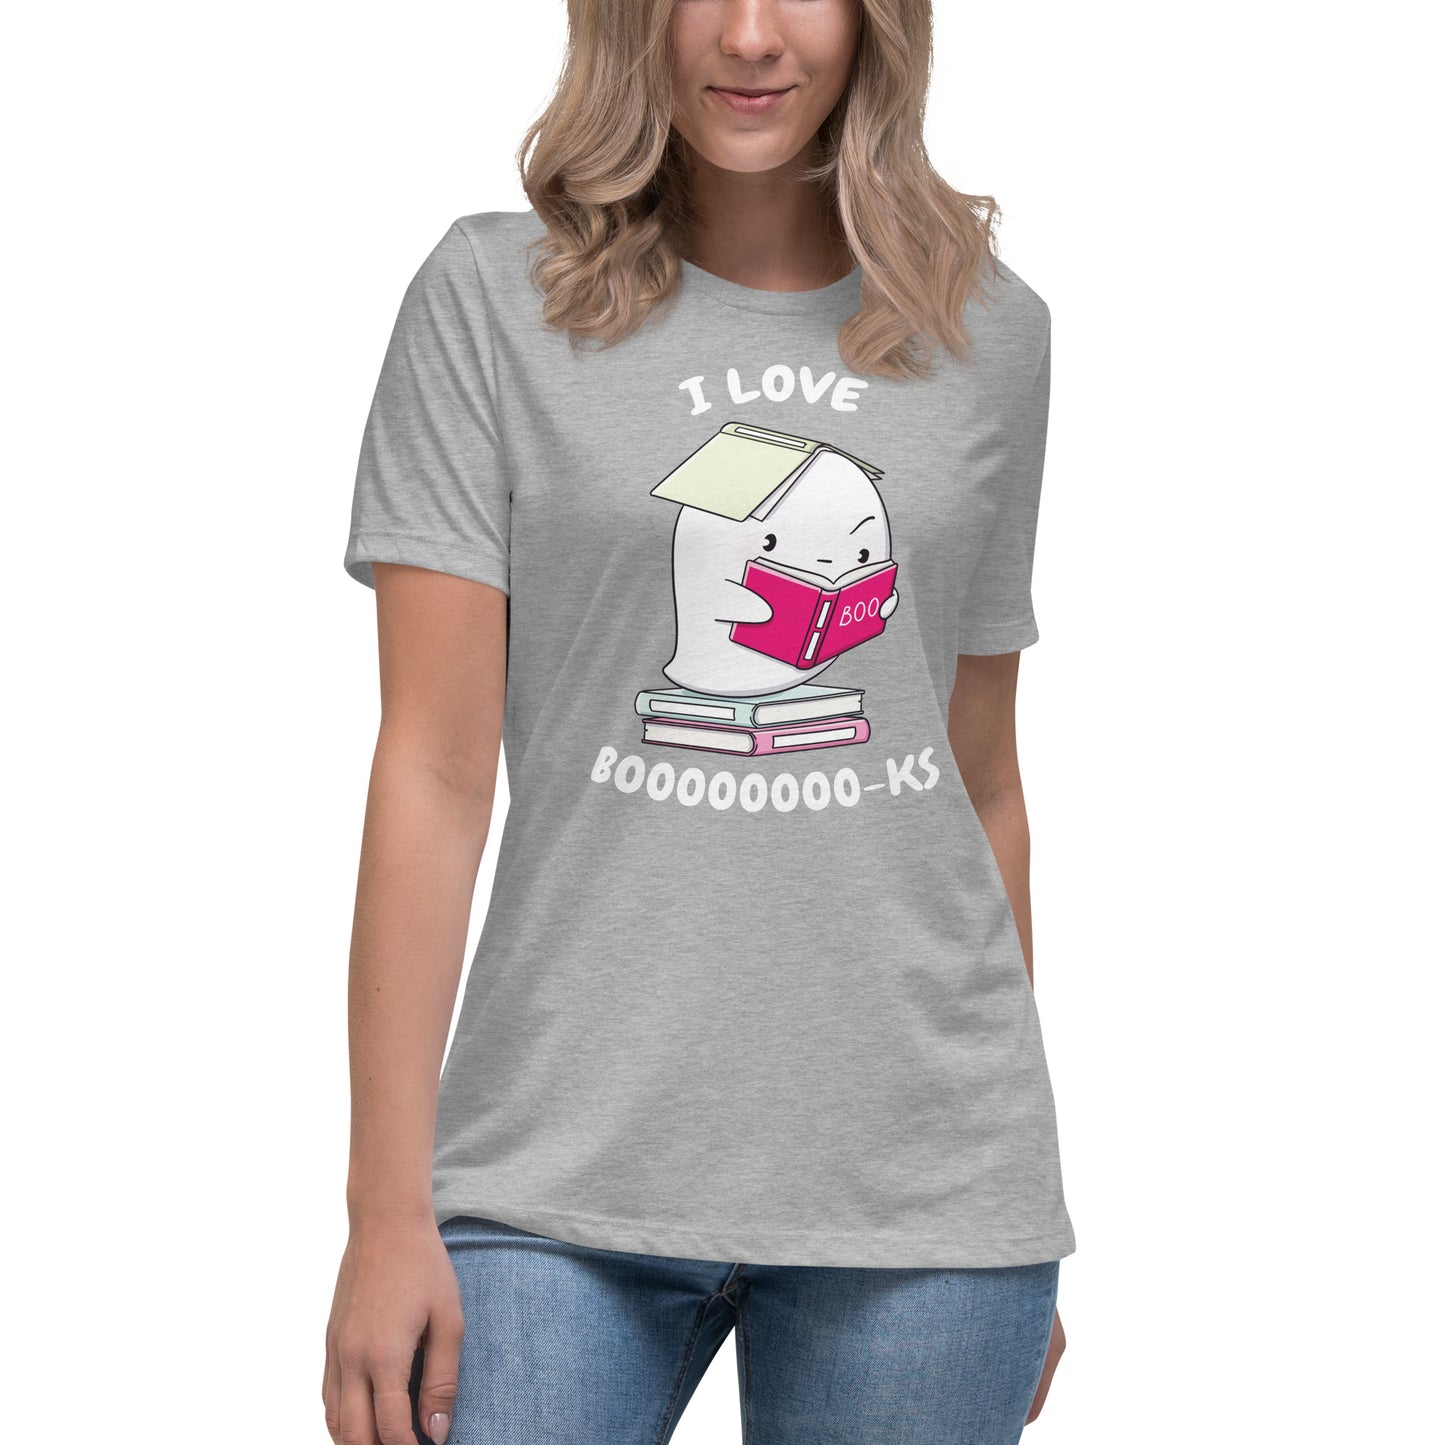 I love books - Women's Relaxed T-Shirt